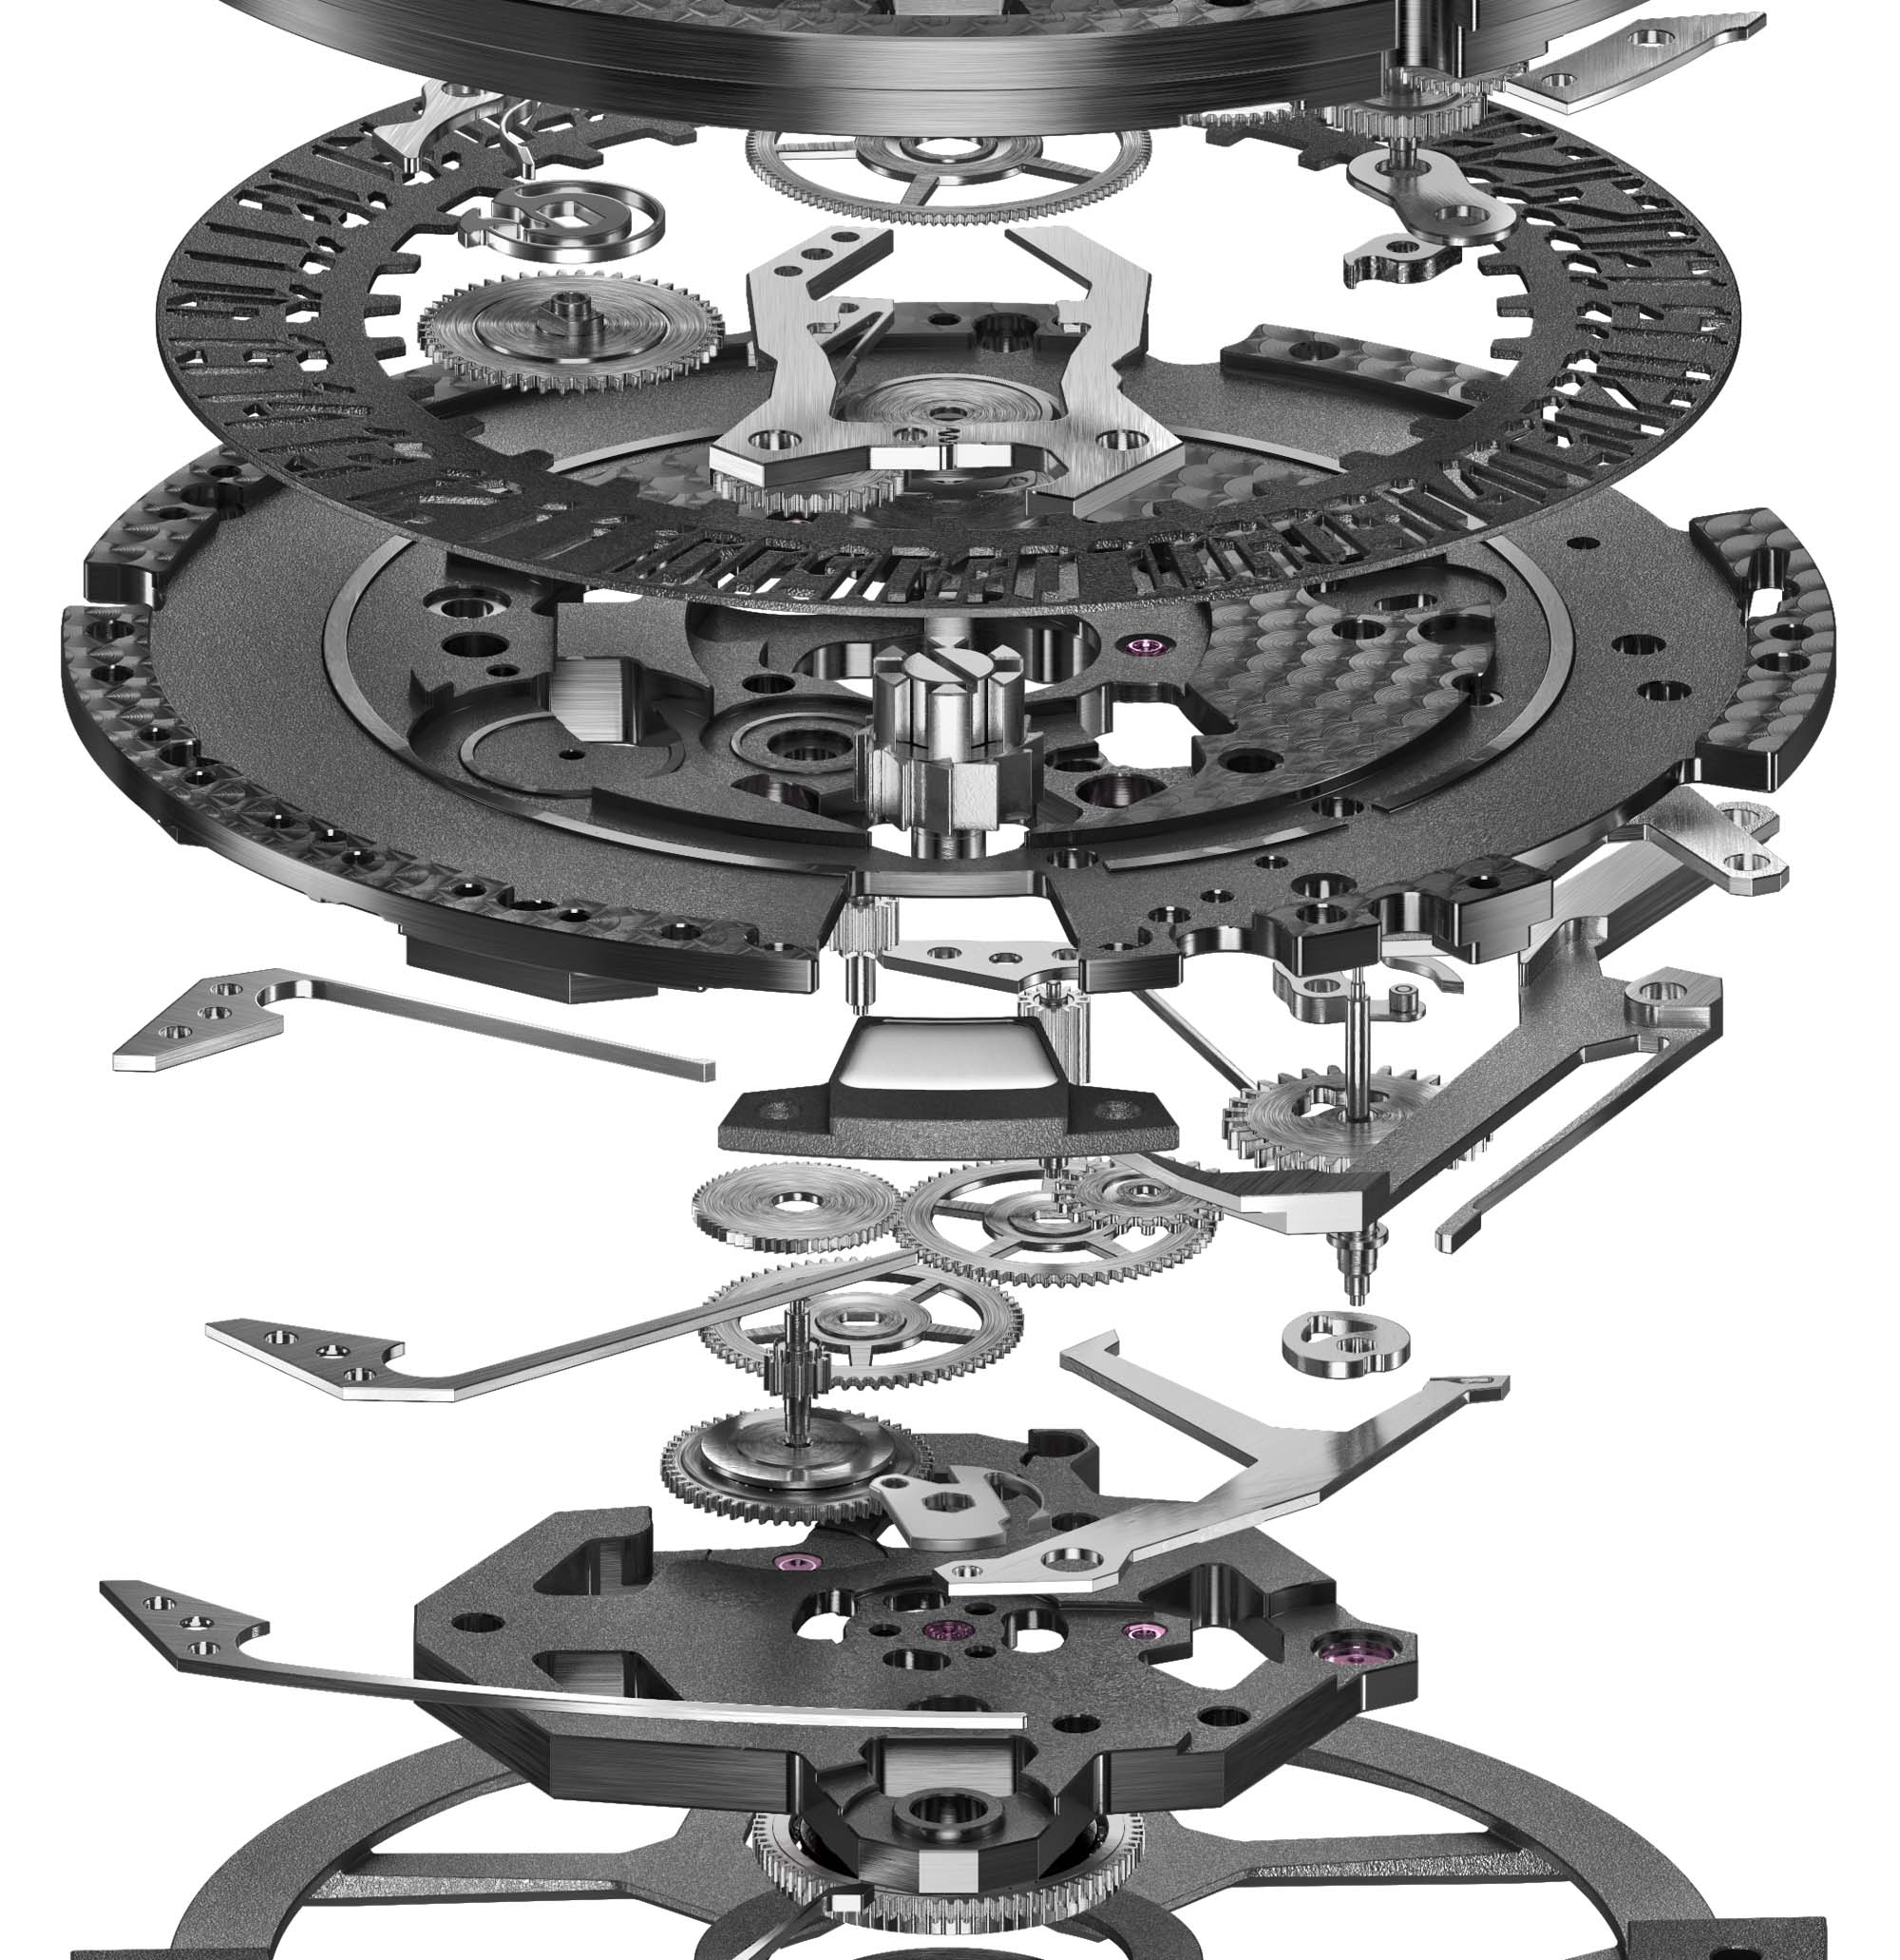 Часы Roger Dubuis Excalibur Spider Flyback Chronograph — «сверхмощный хронограф»